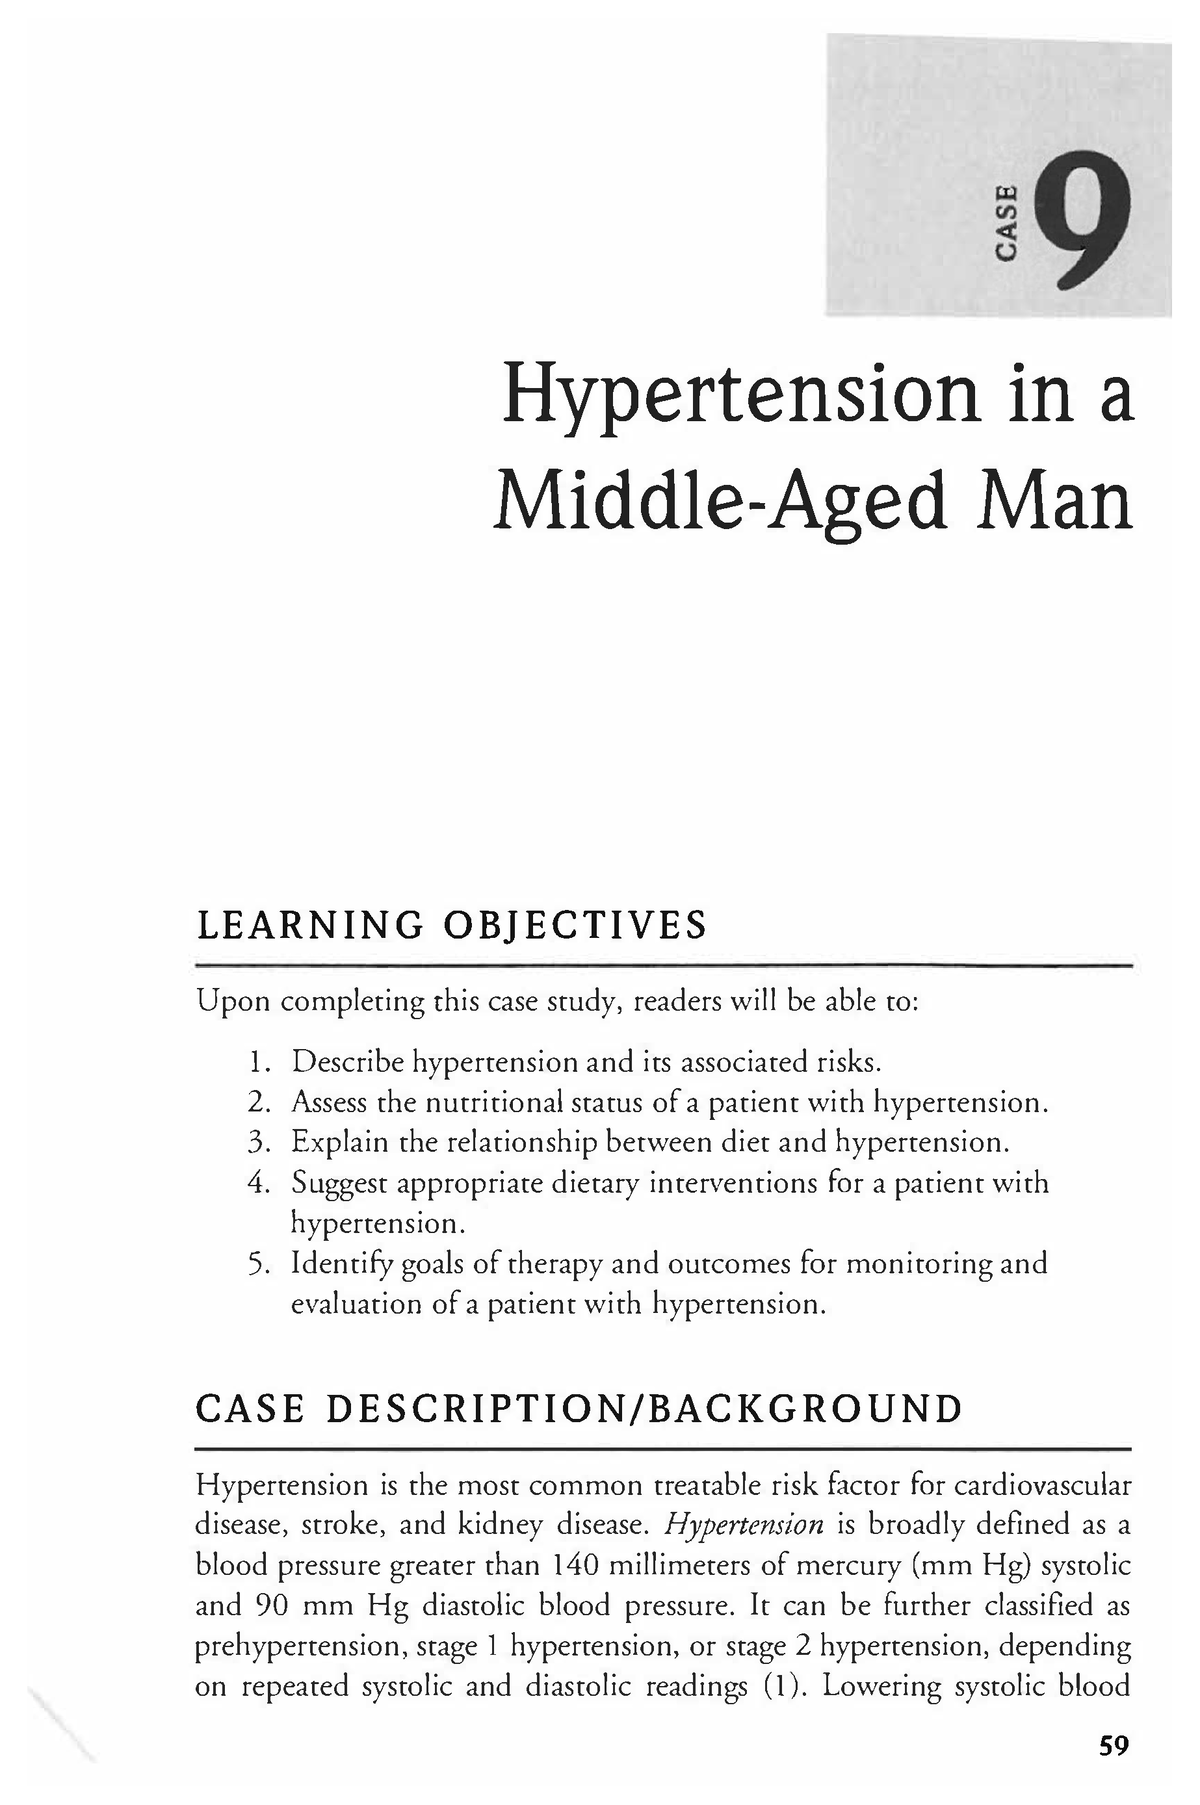 summary of hypertension case study